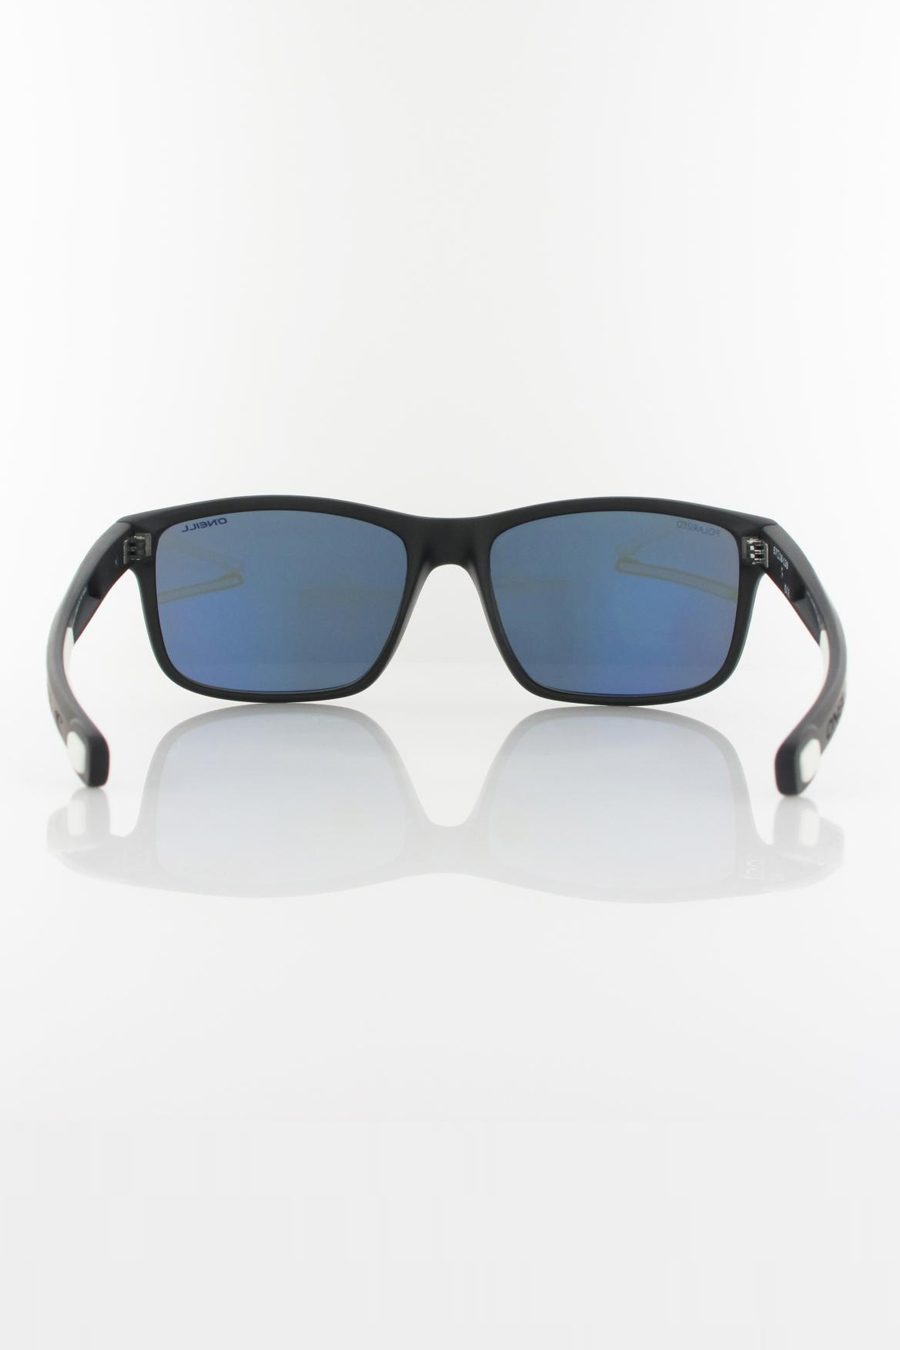 Sunglasses ONEILL ONS-CONVAIR20-104P